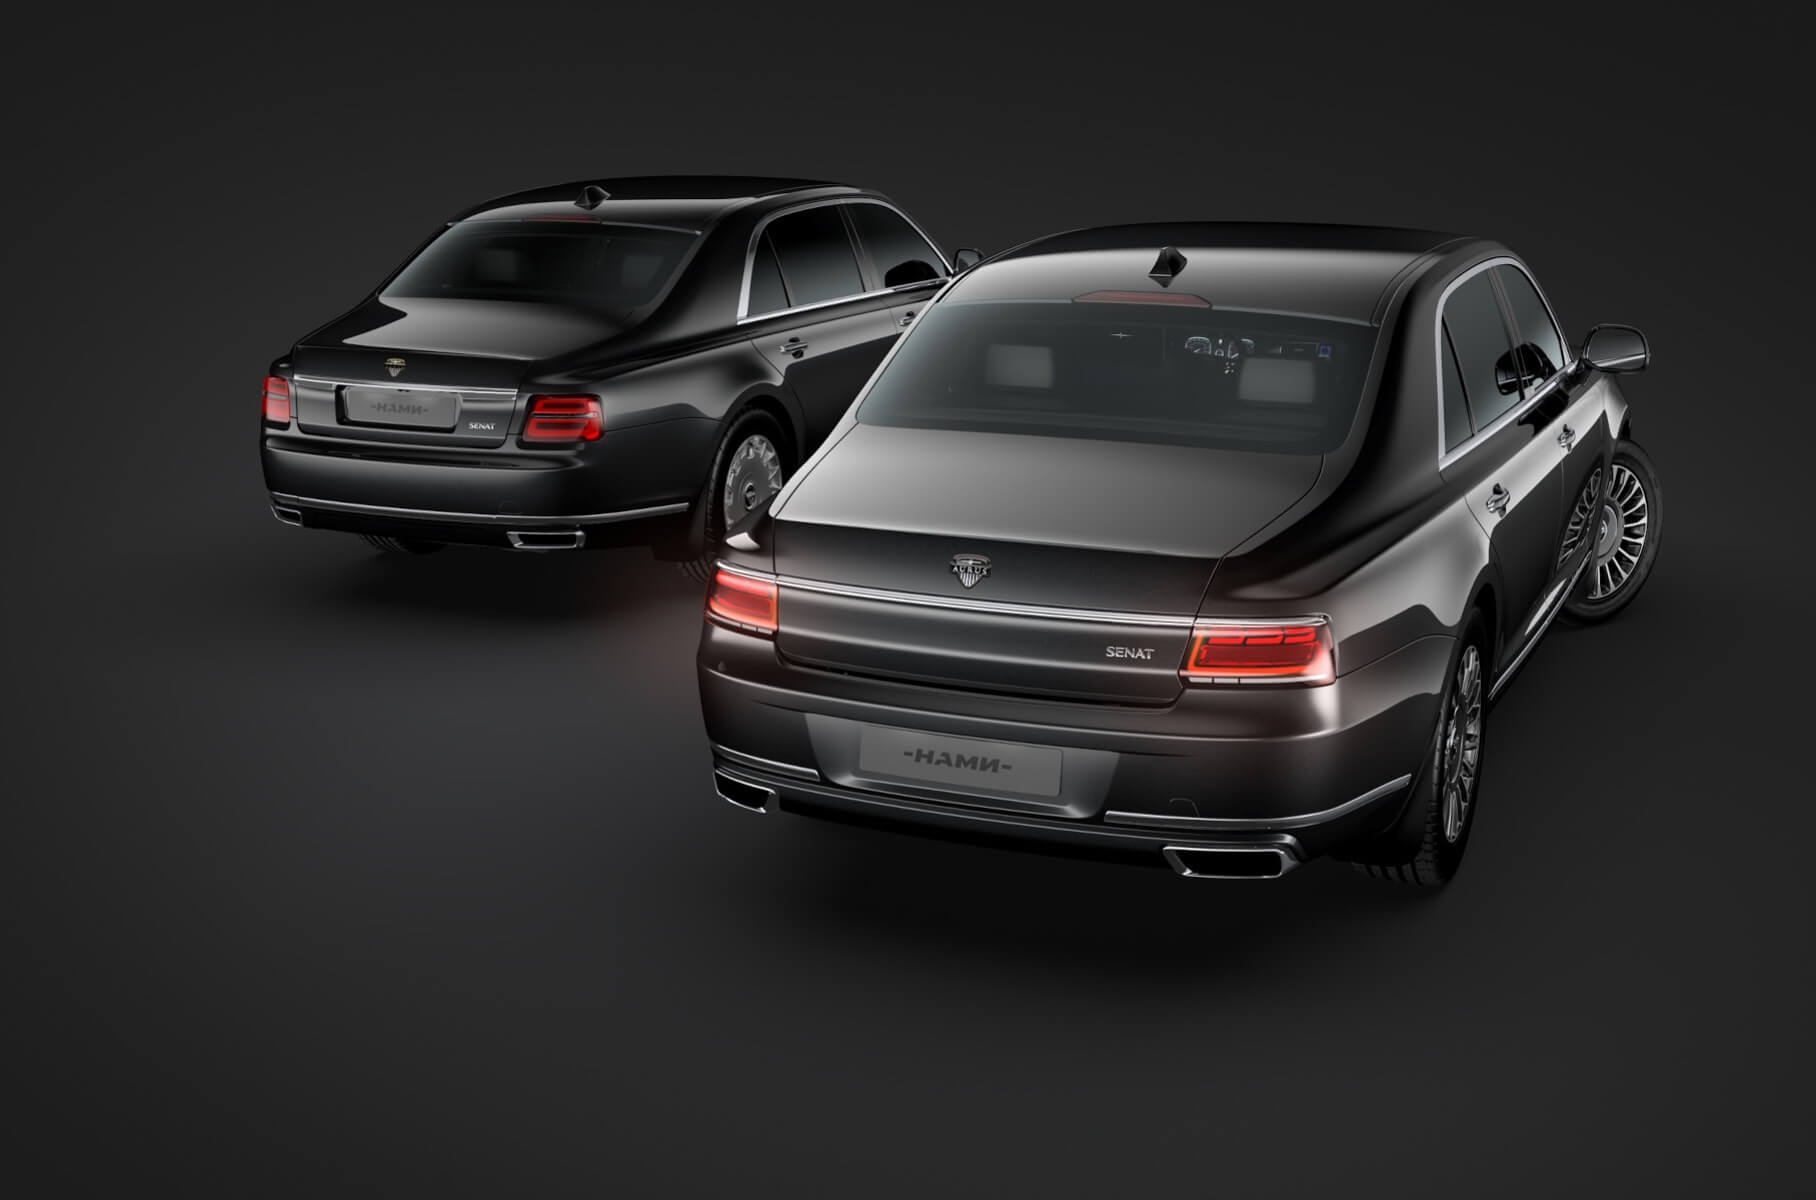 Aurus has updated the Senat limousine: nine major improvements are listed